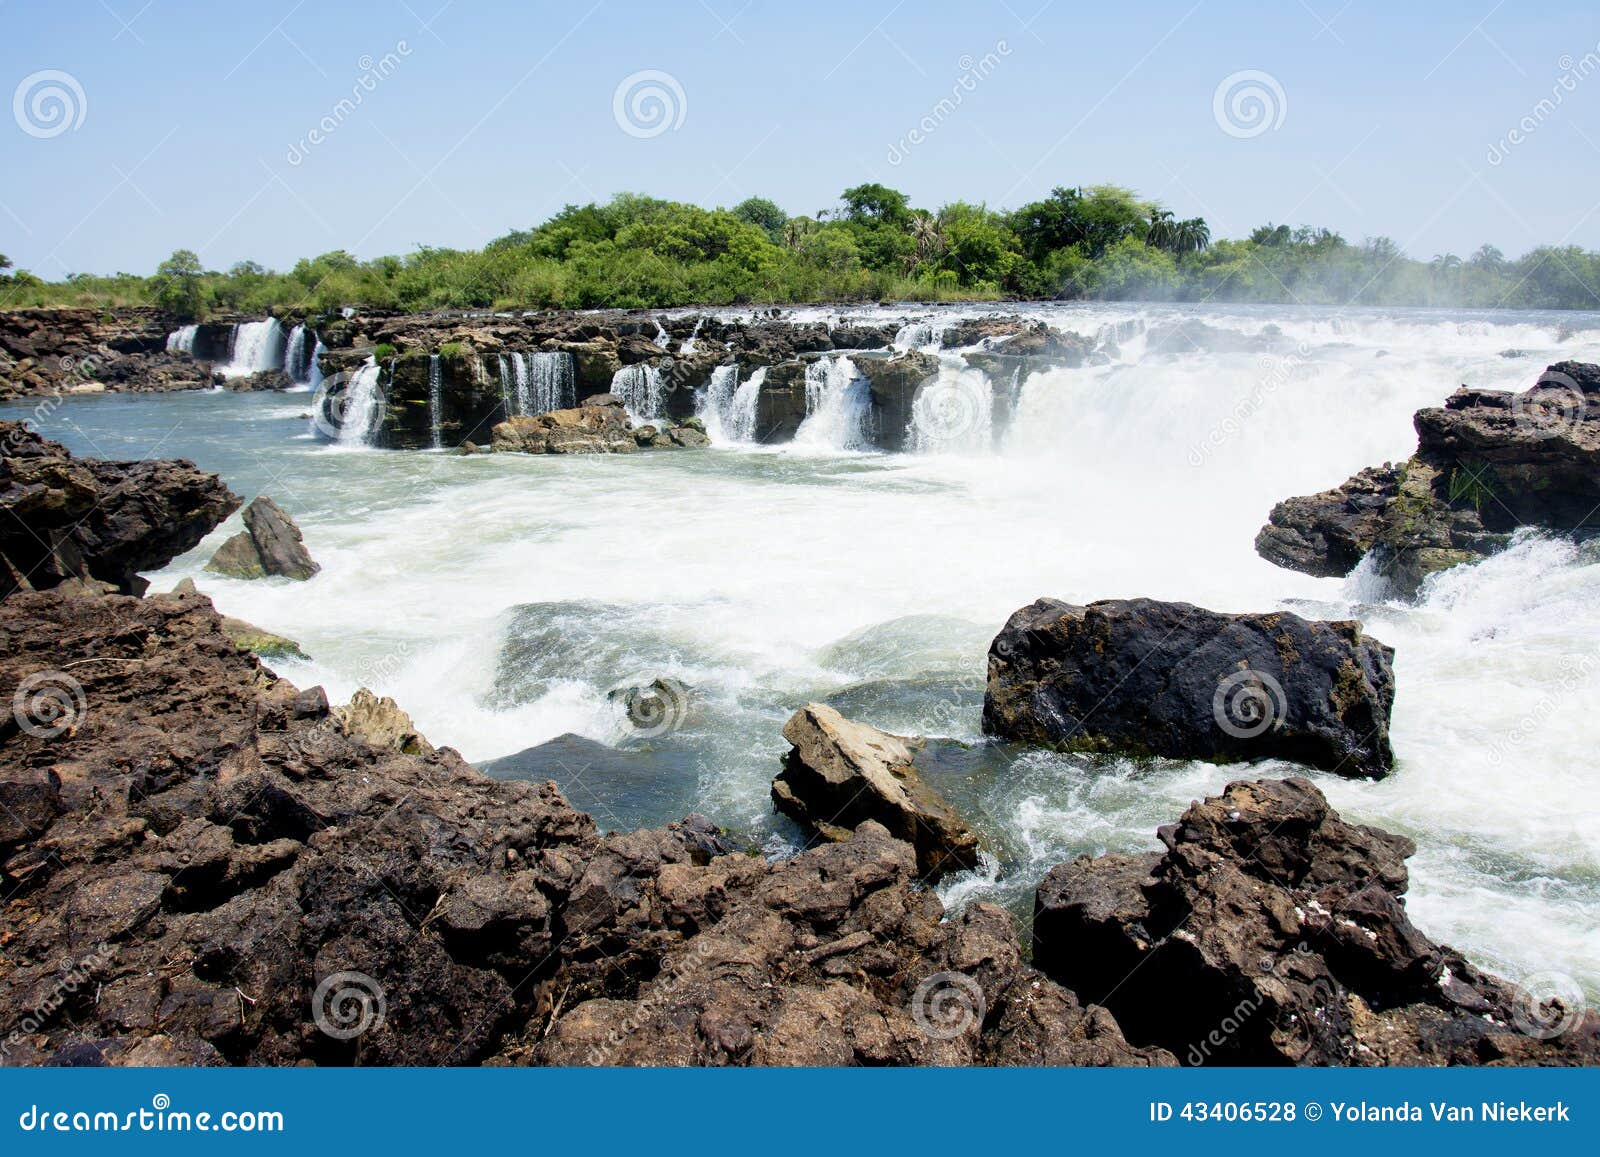 sioma falls, zambia